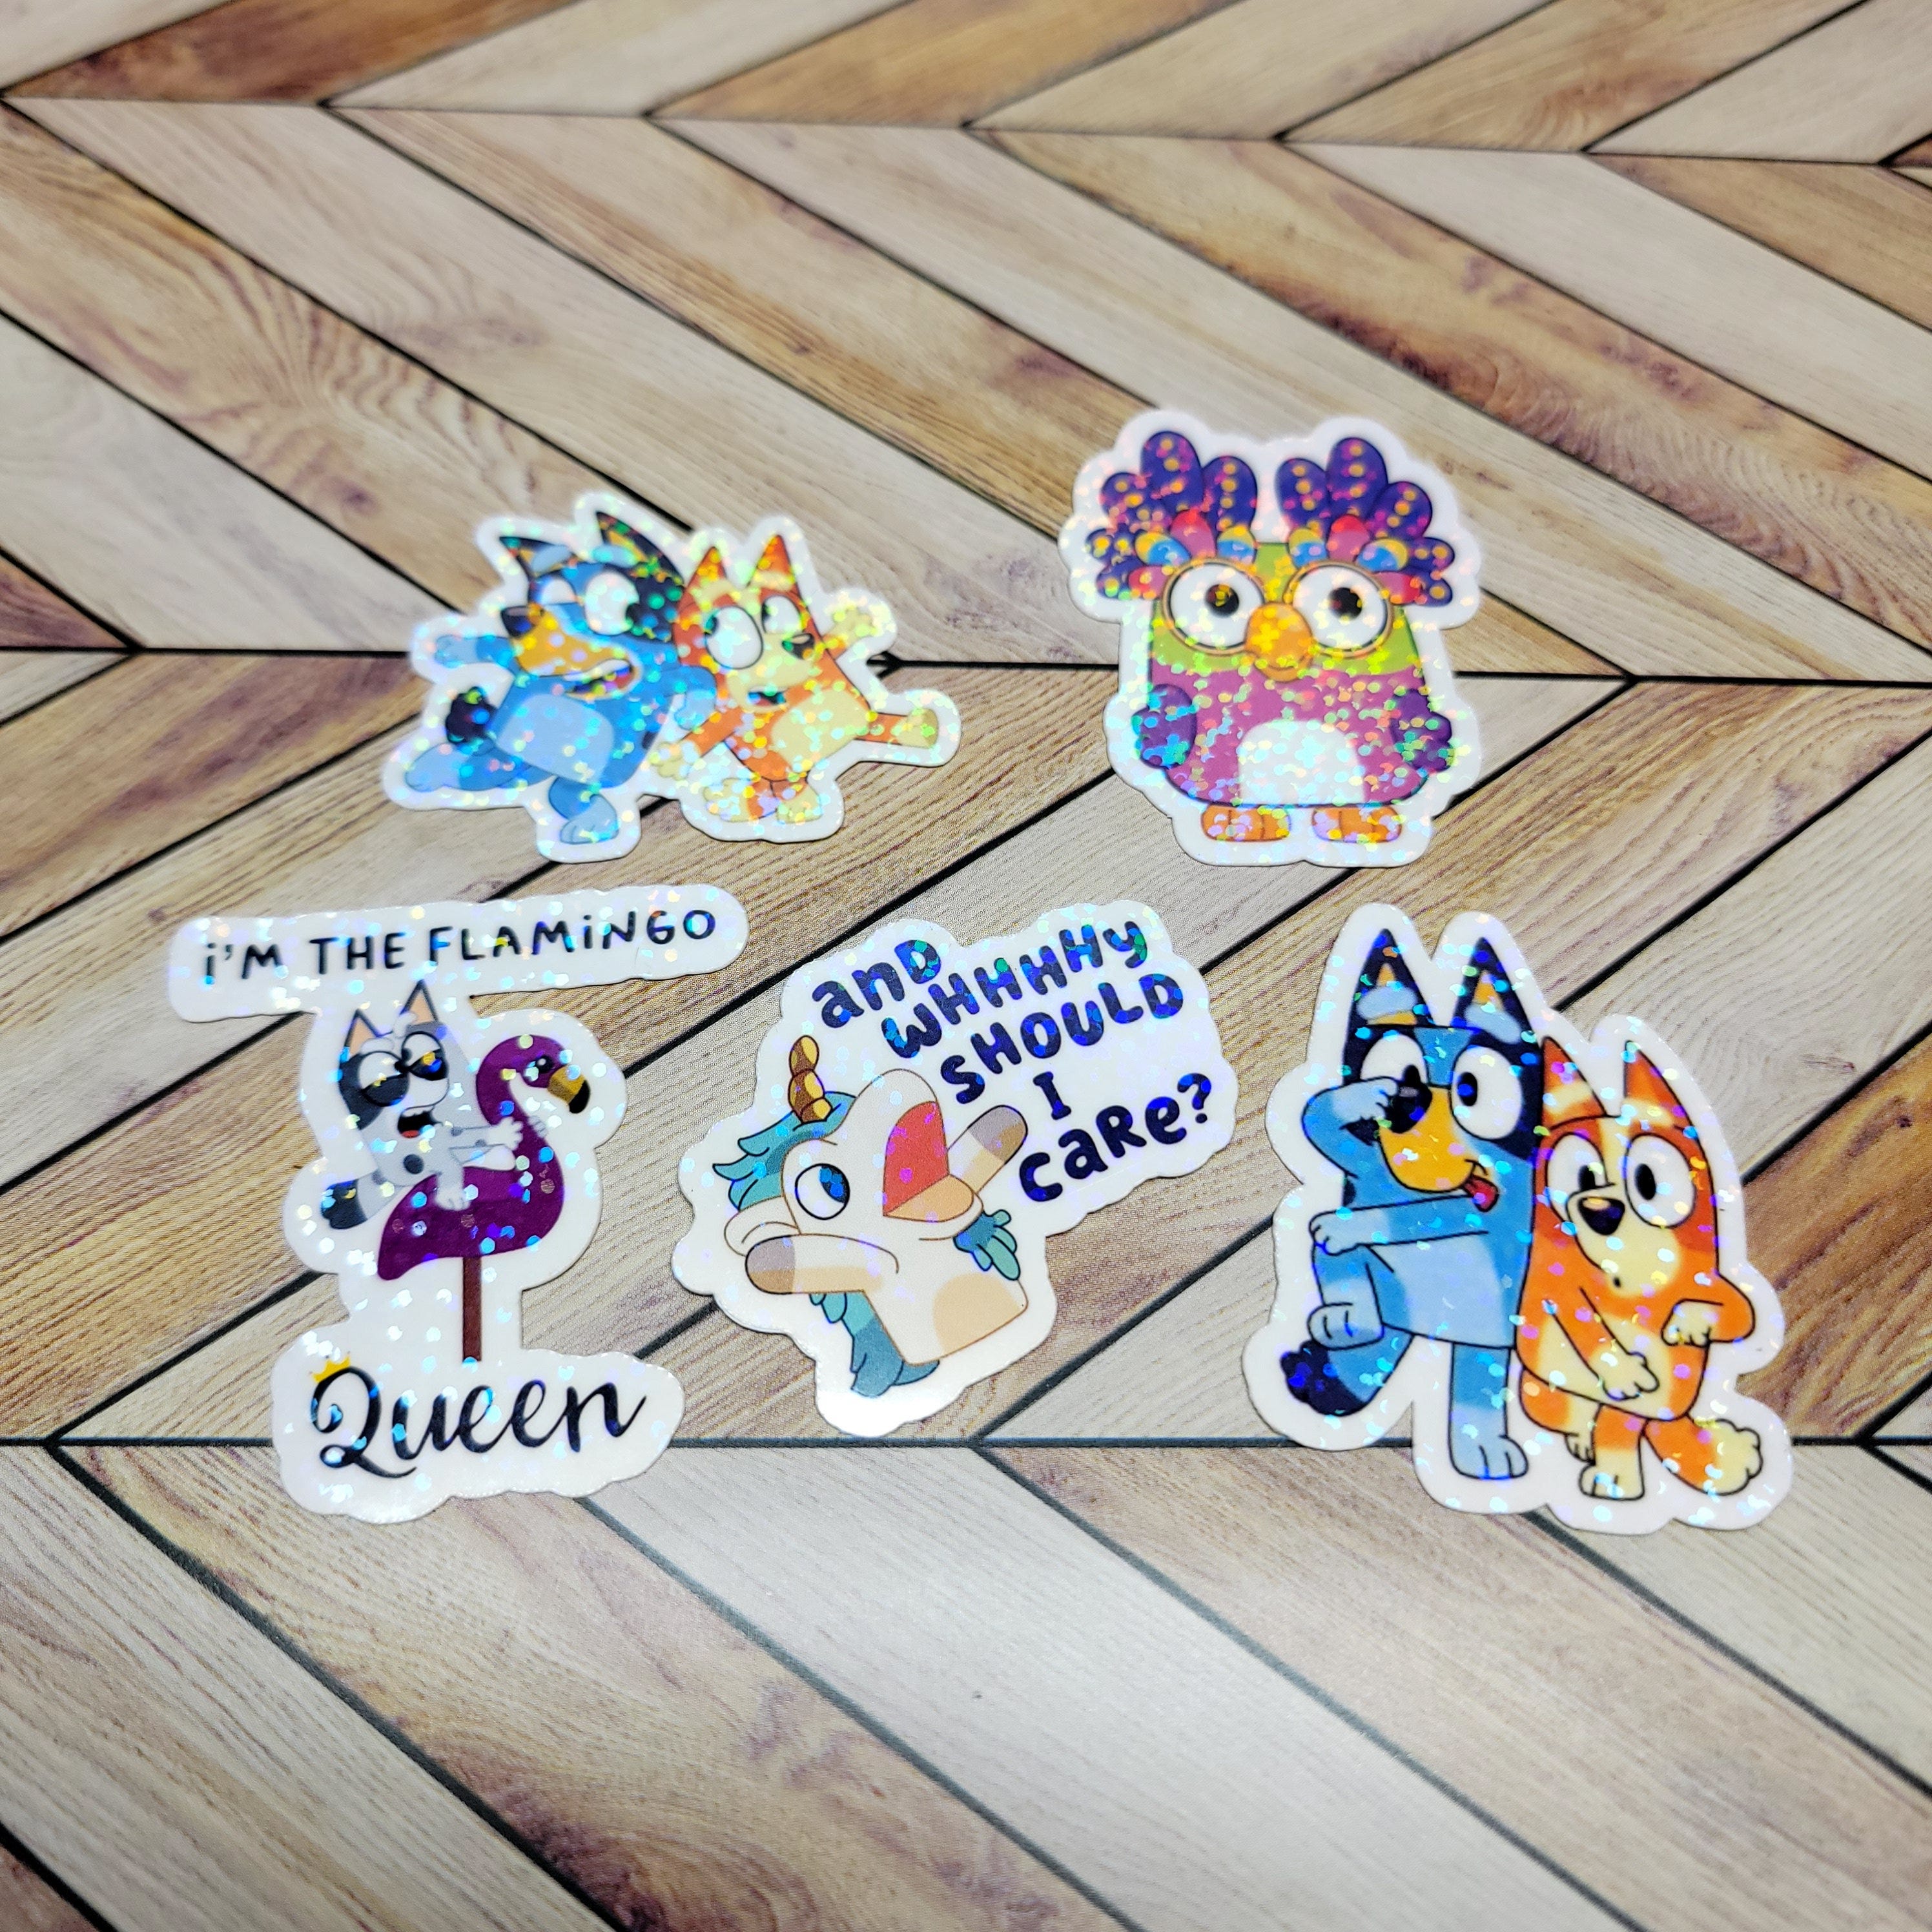 Holographic bluey bingo chattermax Muffin unicorse stickers